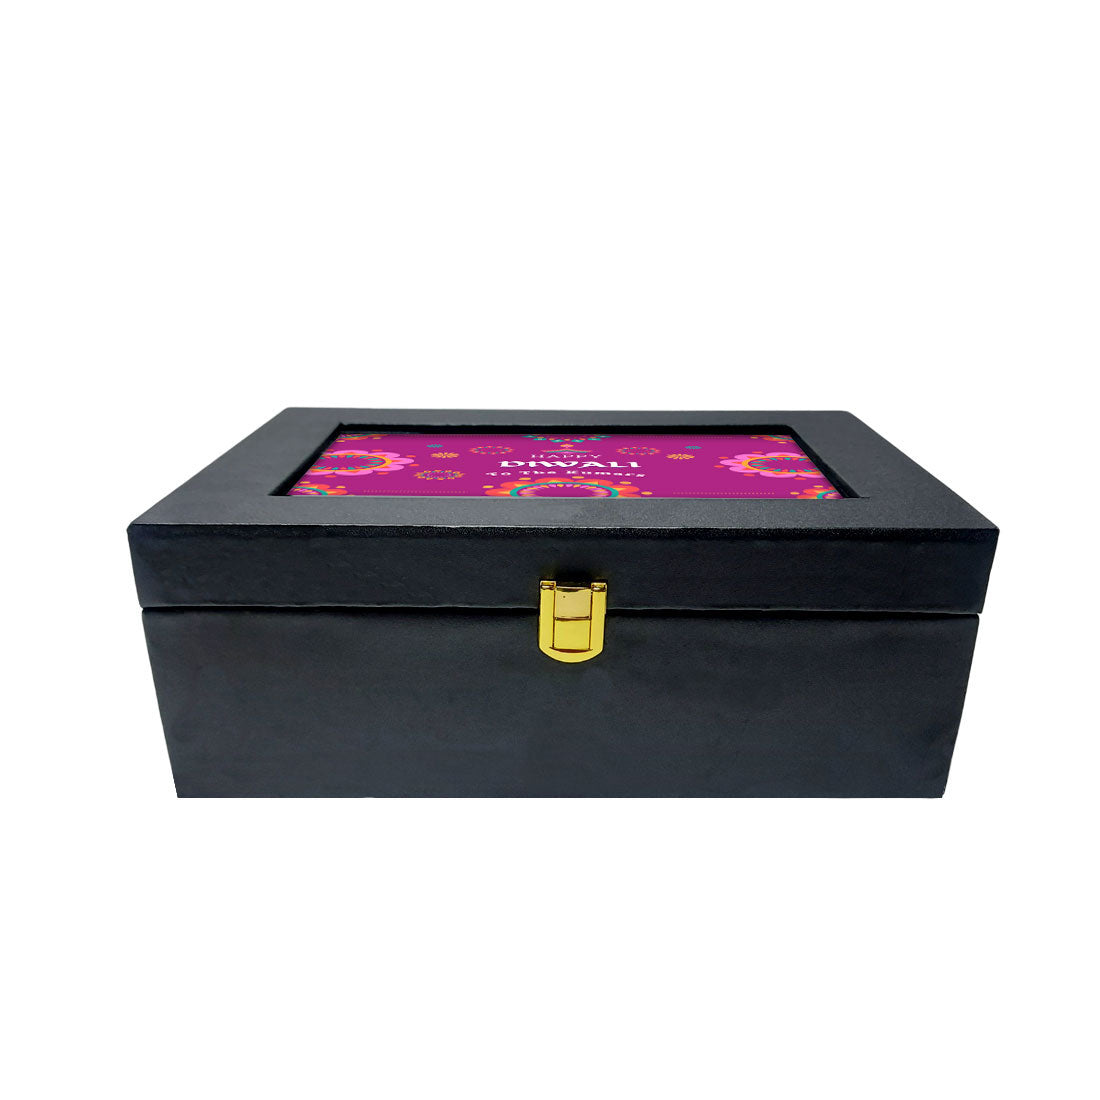 Personalized Chocolate Box for Diwali Gift Box - Designer